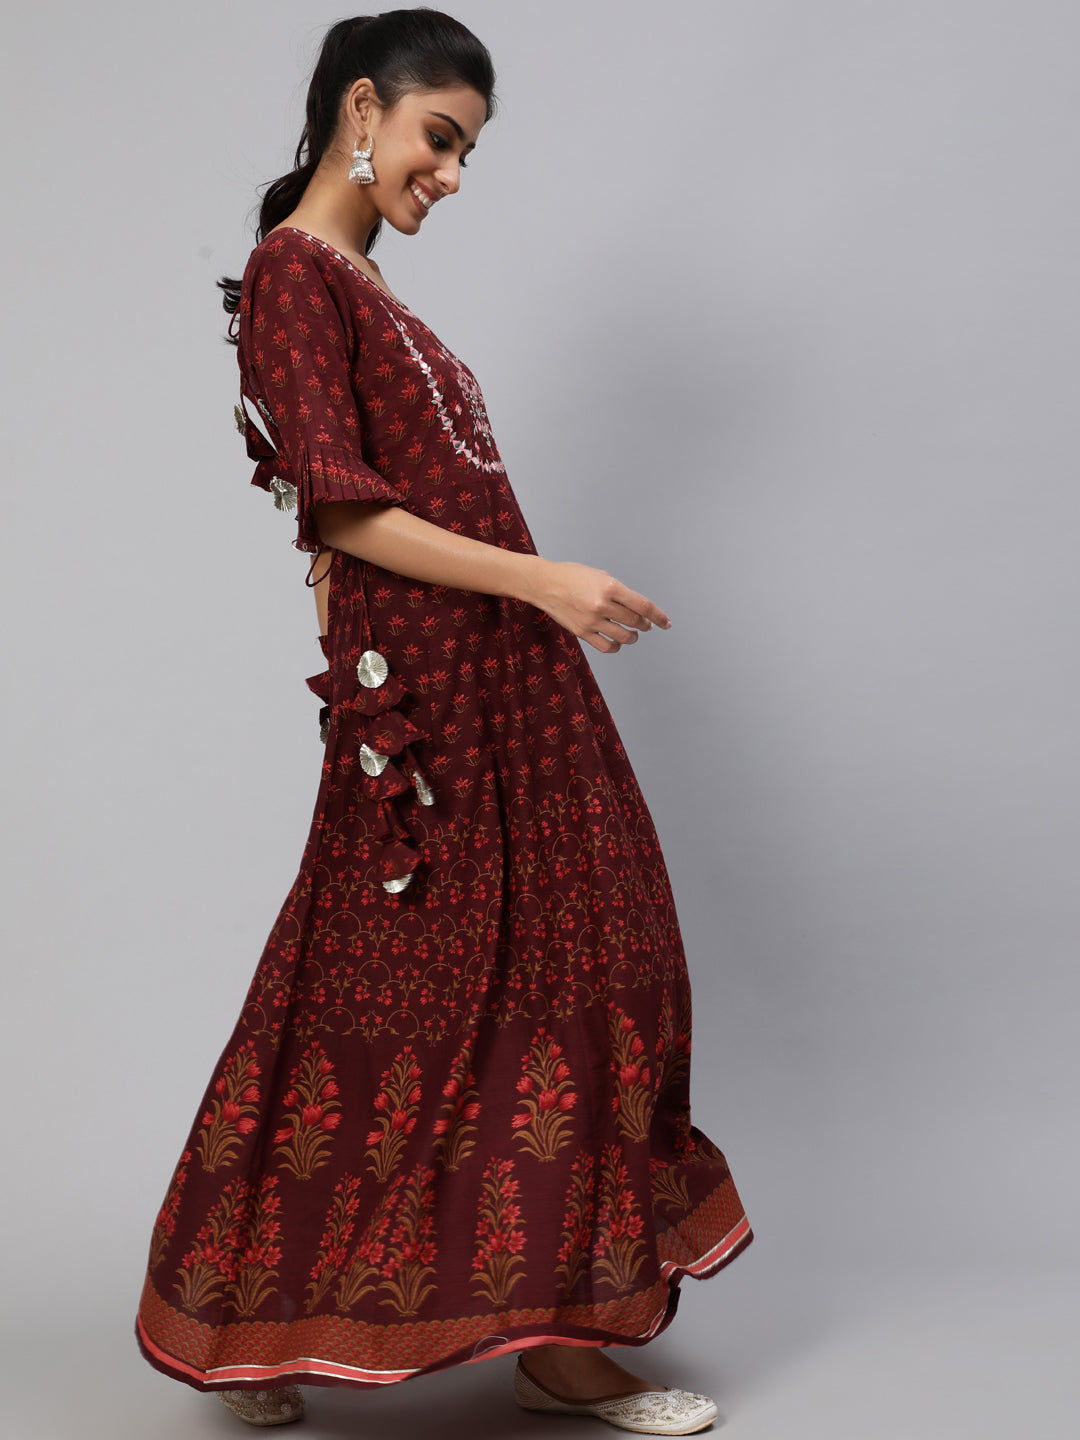 Women's Maroon Floral Print Flared Maxi Dress - Final Clearance Sale